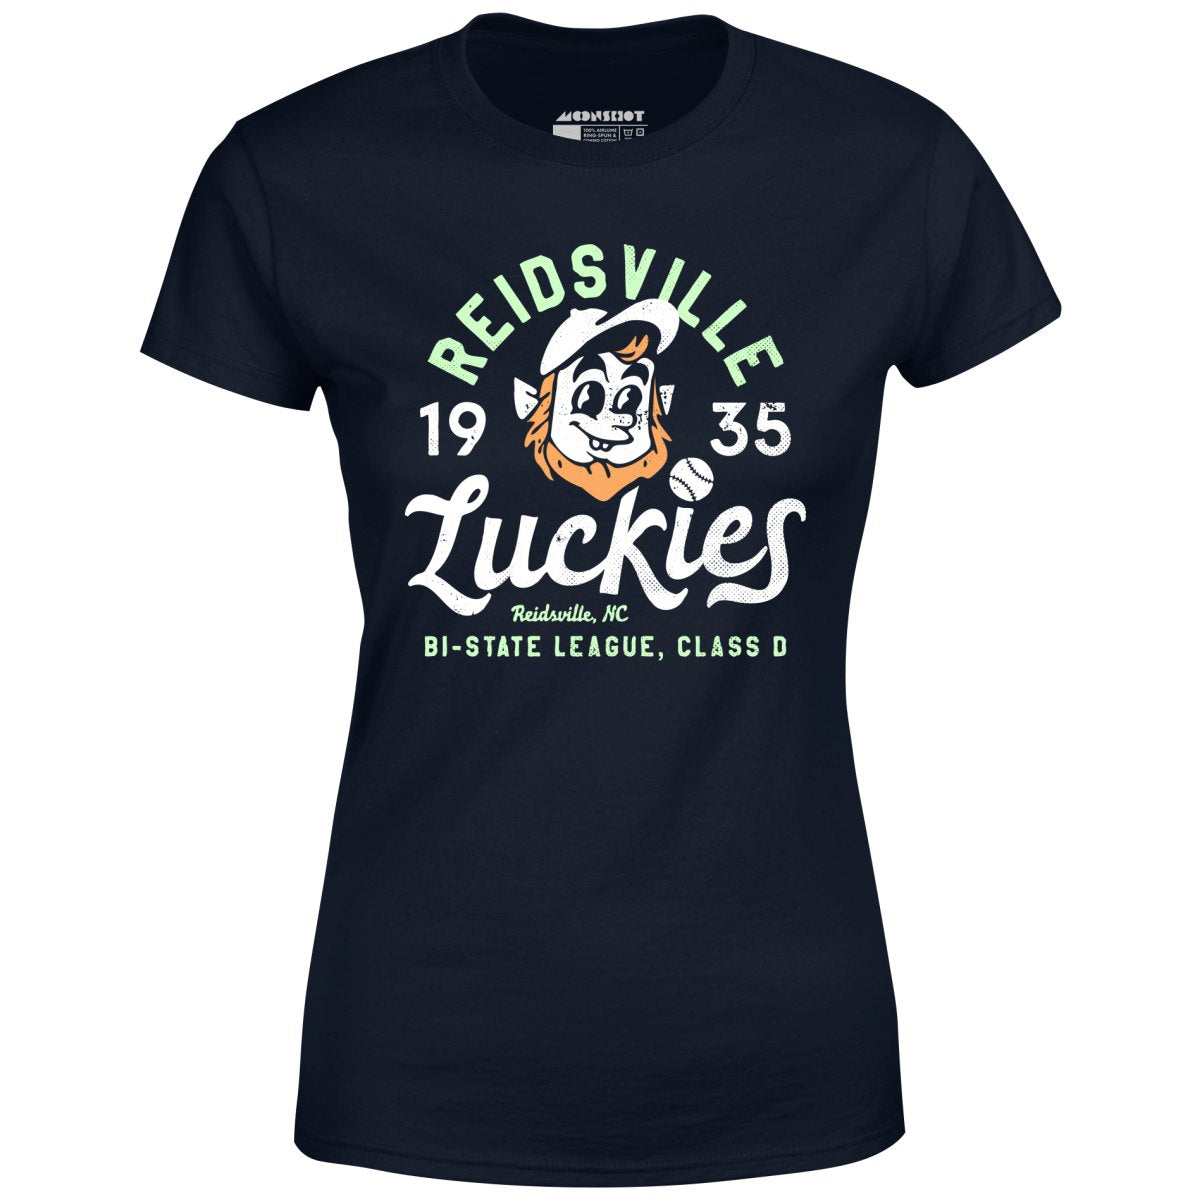 Reidsville Luckies - North Carolina - Vintage Defunct Baseball Teams - Women's T-Shirt